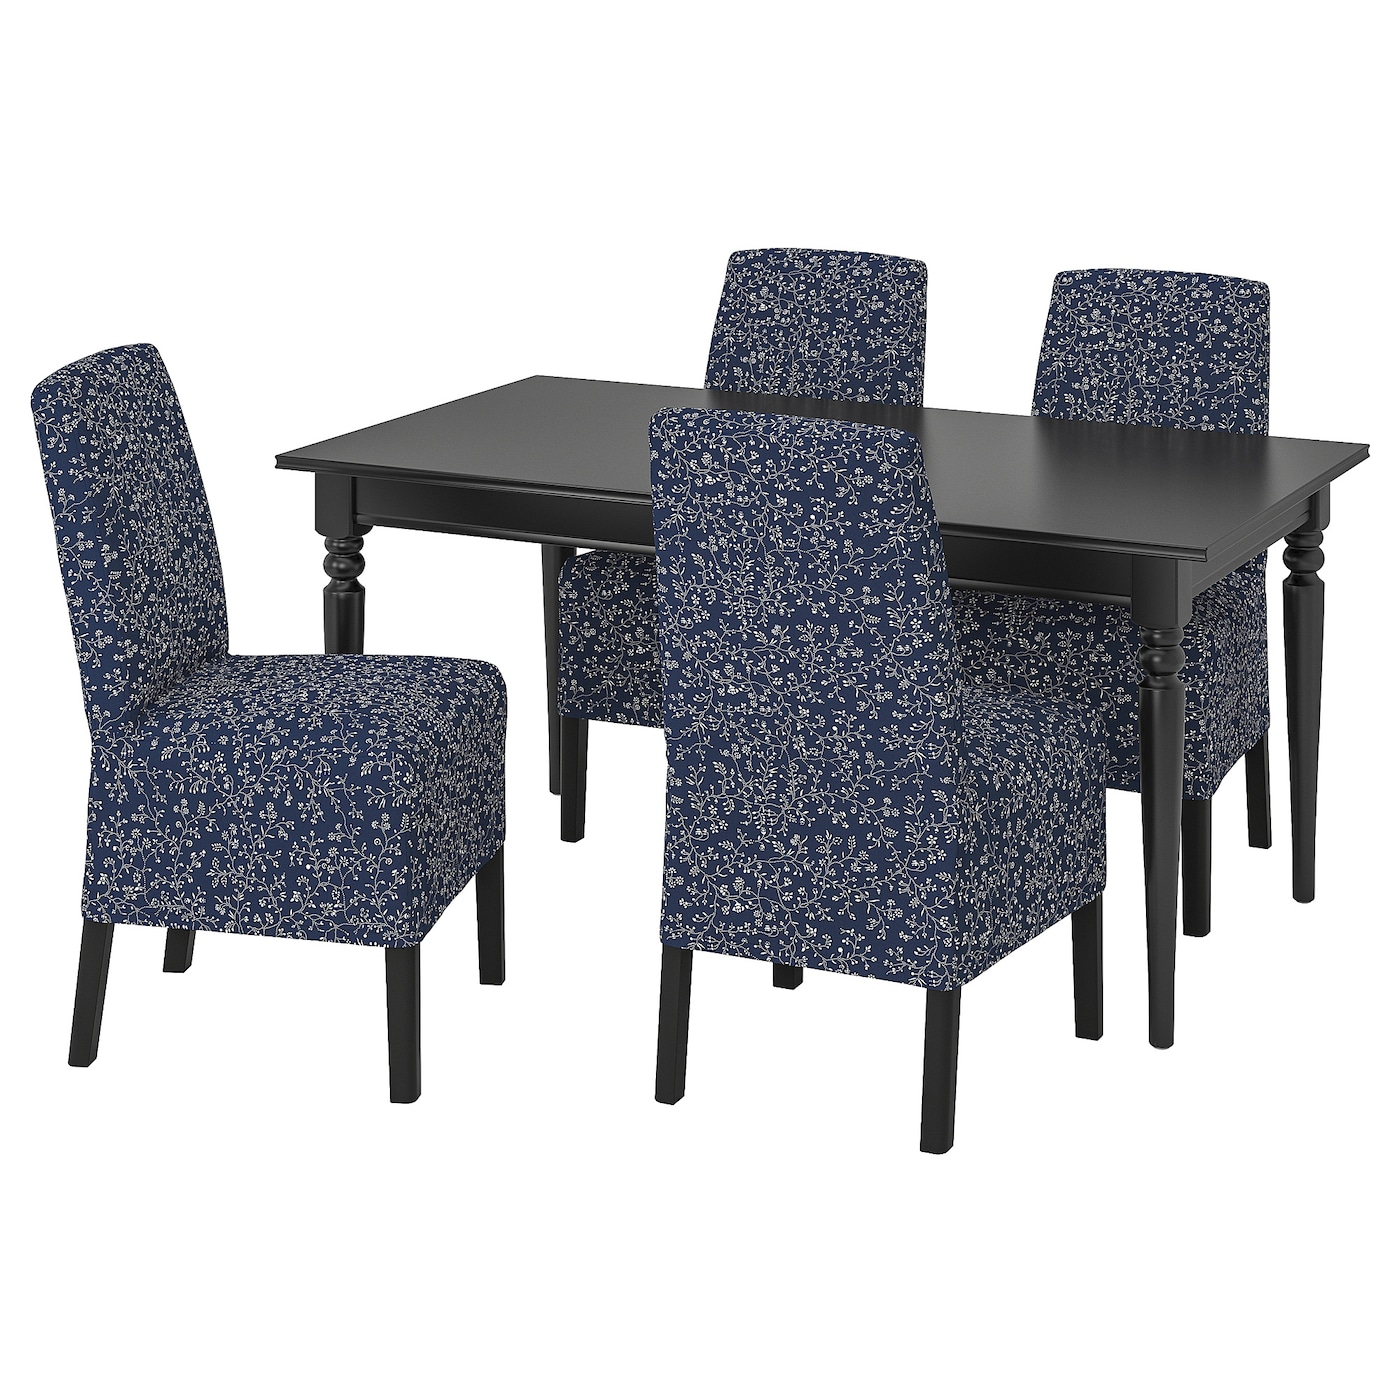 Стол и 4 стула - INGATORP / BERGMUND IKEA/ ИНГАТОРП/БЕРГМУНД ИКЕА, 215/155х87 см, синий с рисунком/коричневый